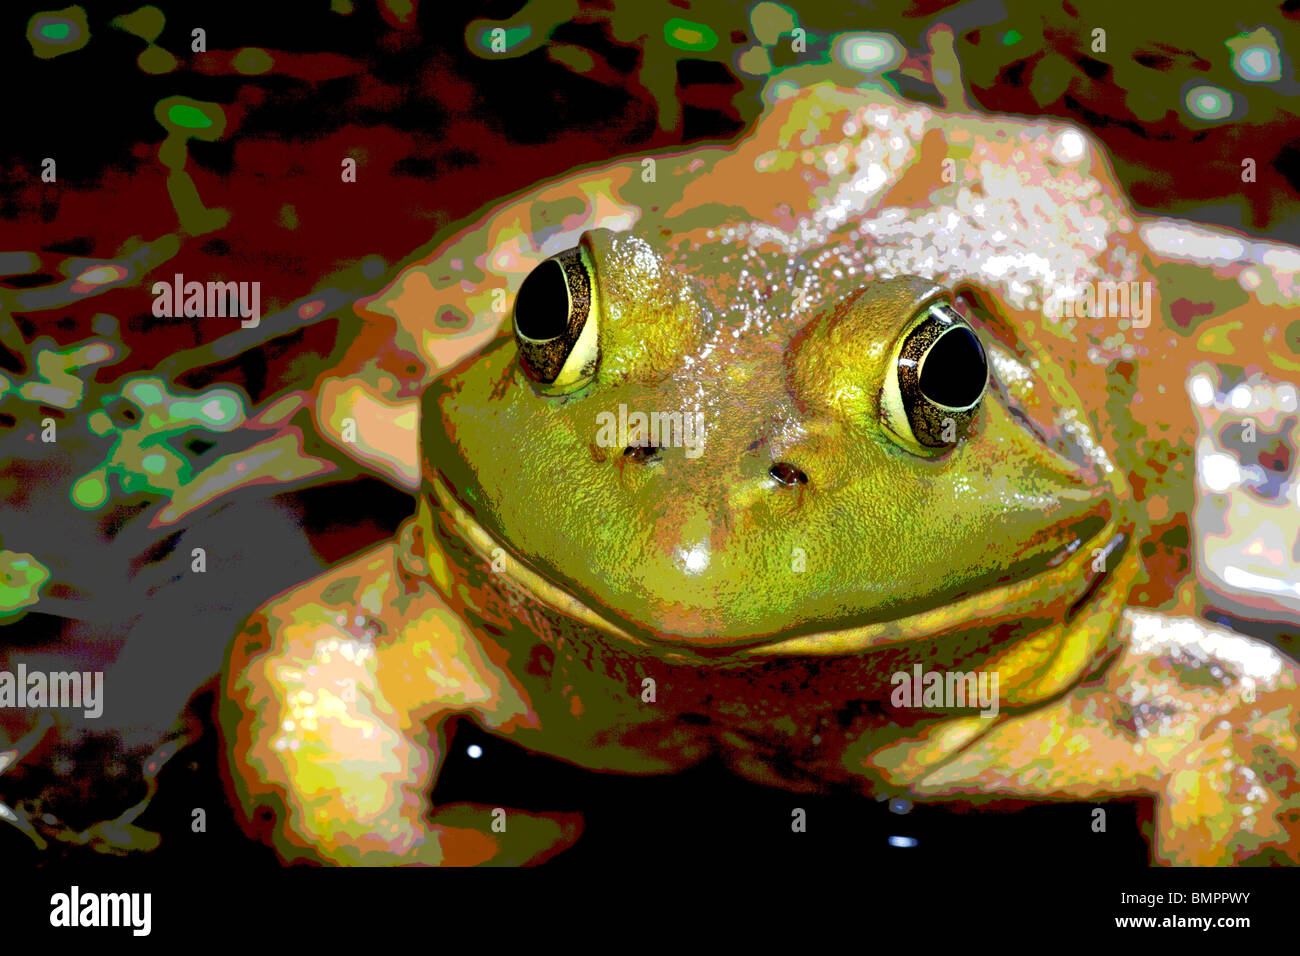 The American Bullfrog (Rana catesbeiana), often simply known as the Bullfrog. Stock Photo